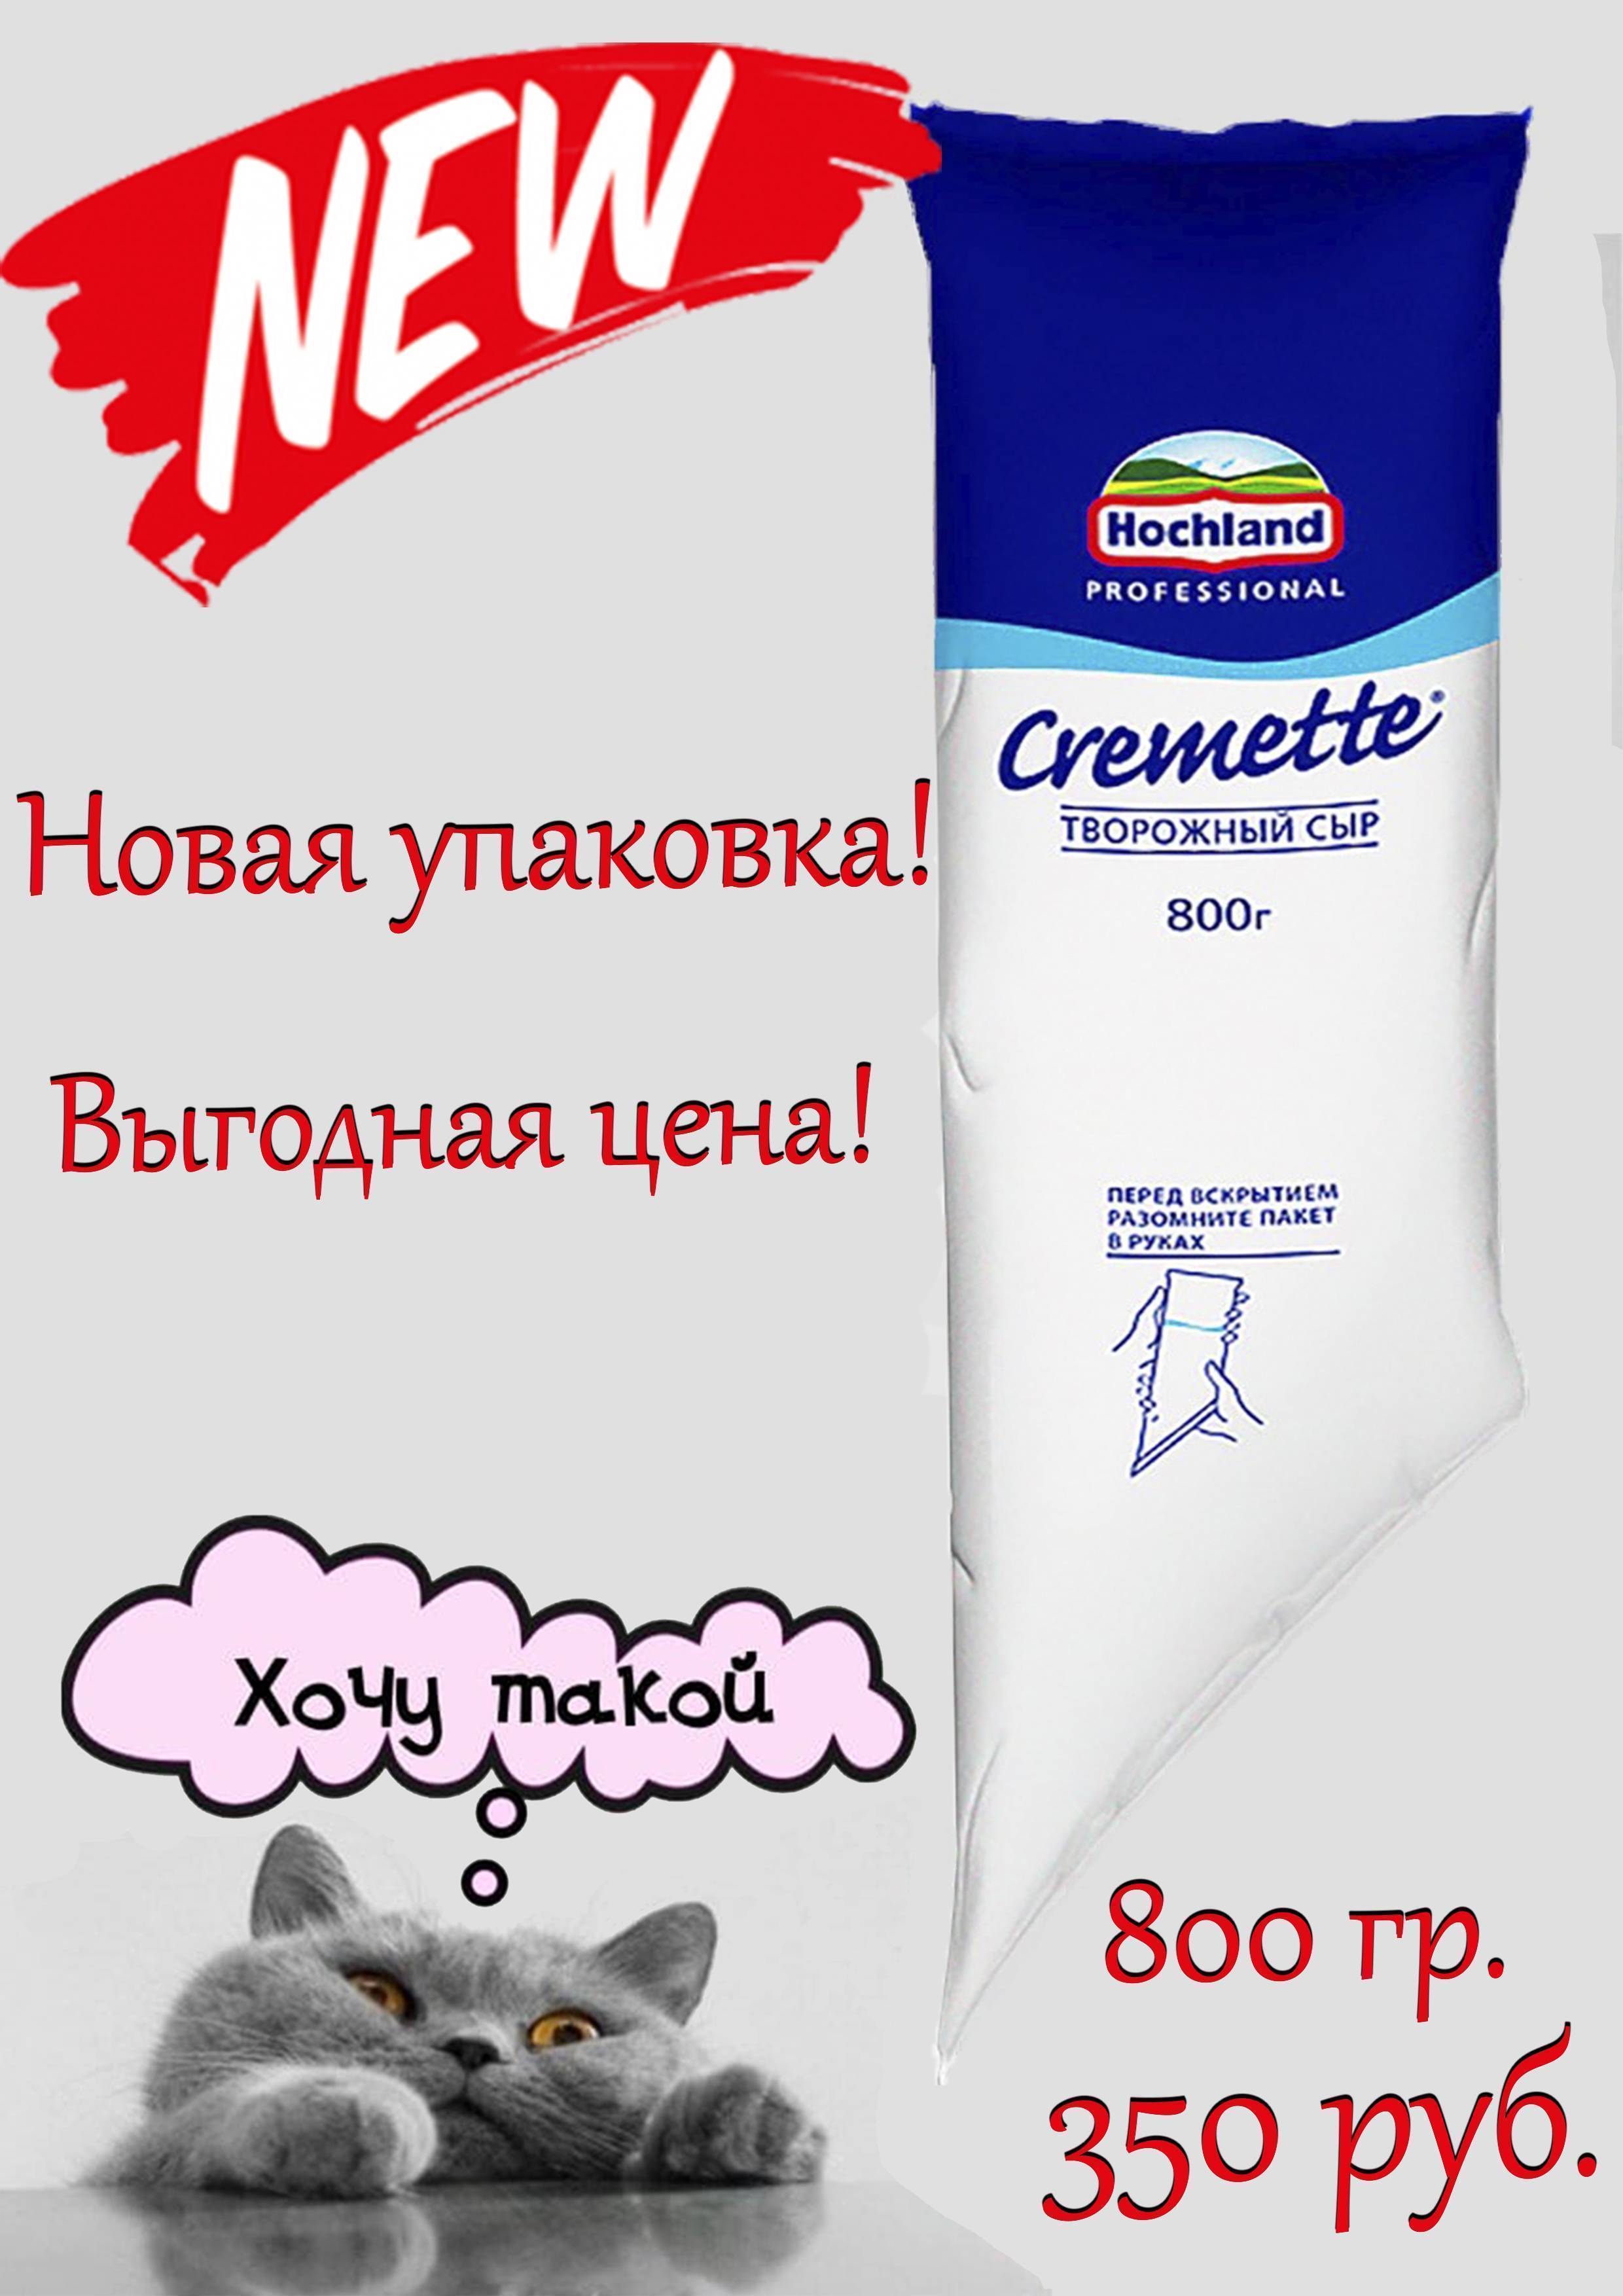 Сыр Креметте Фото Упаковки